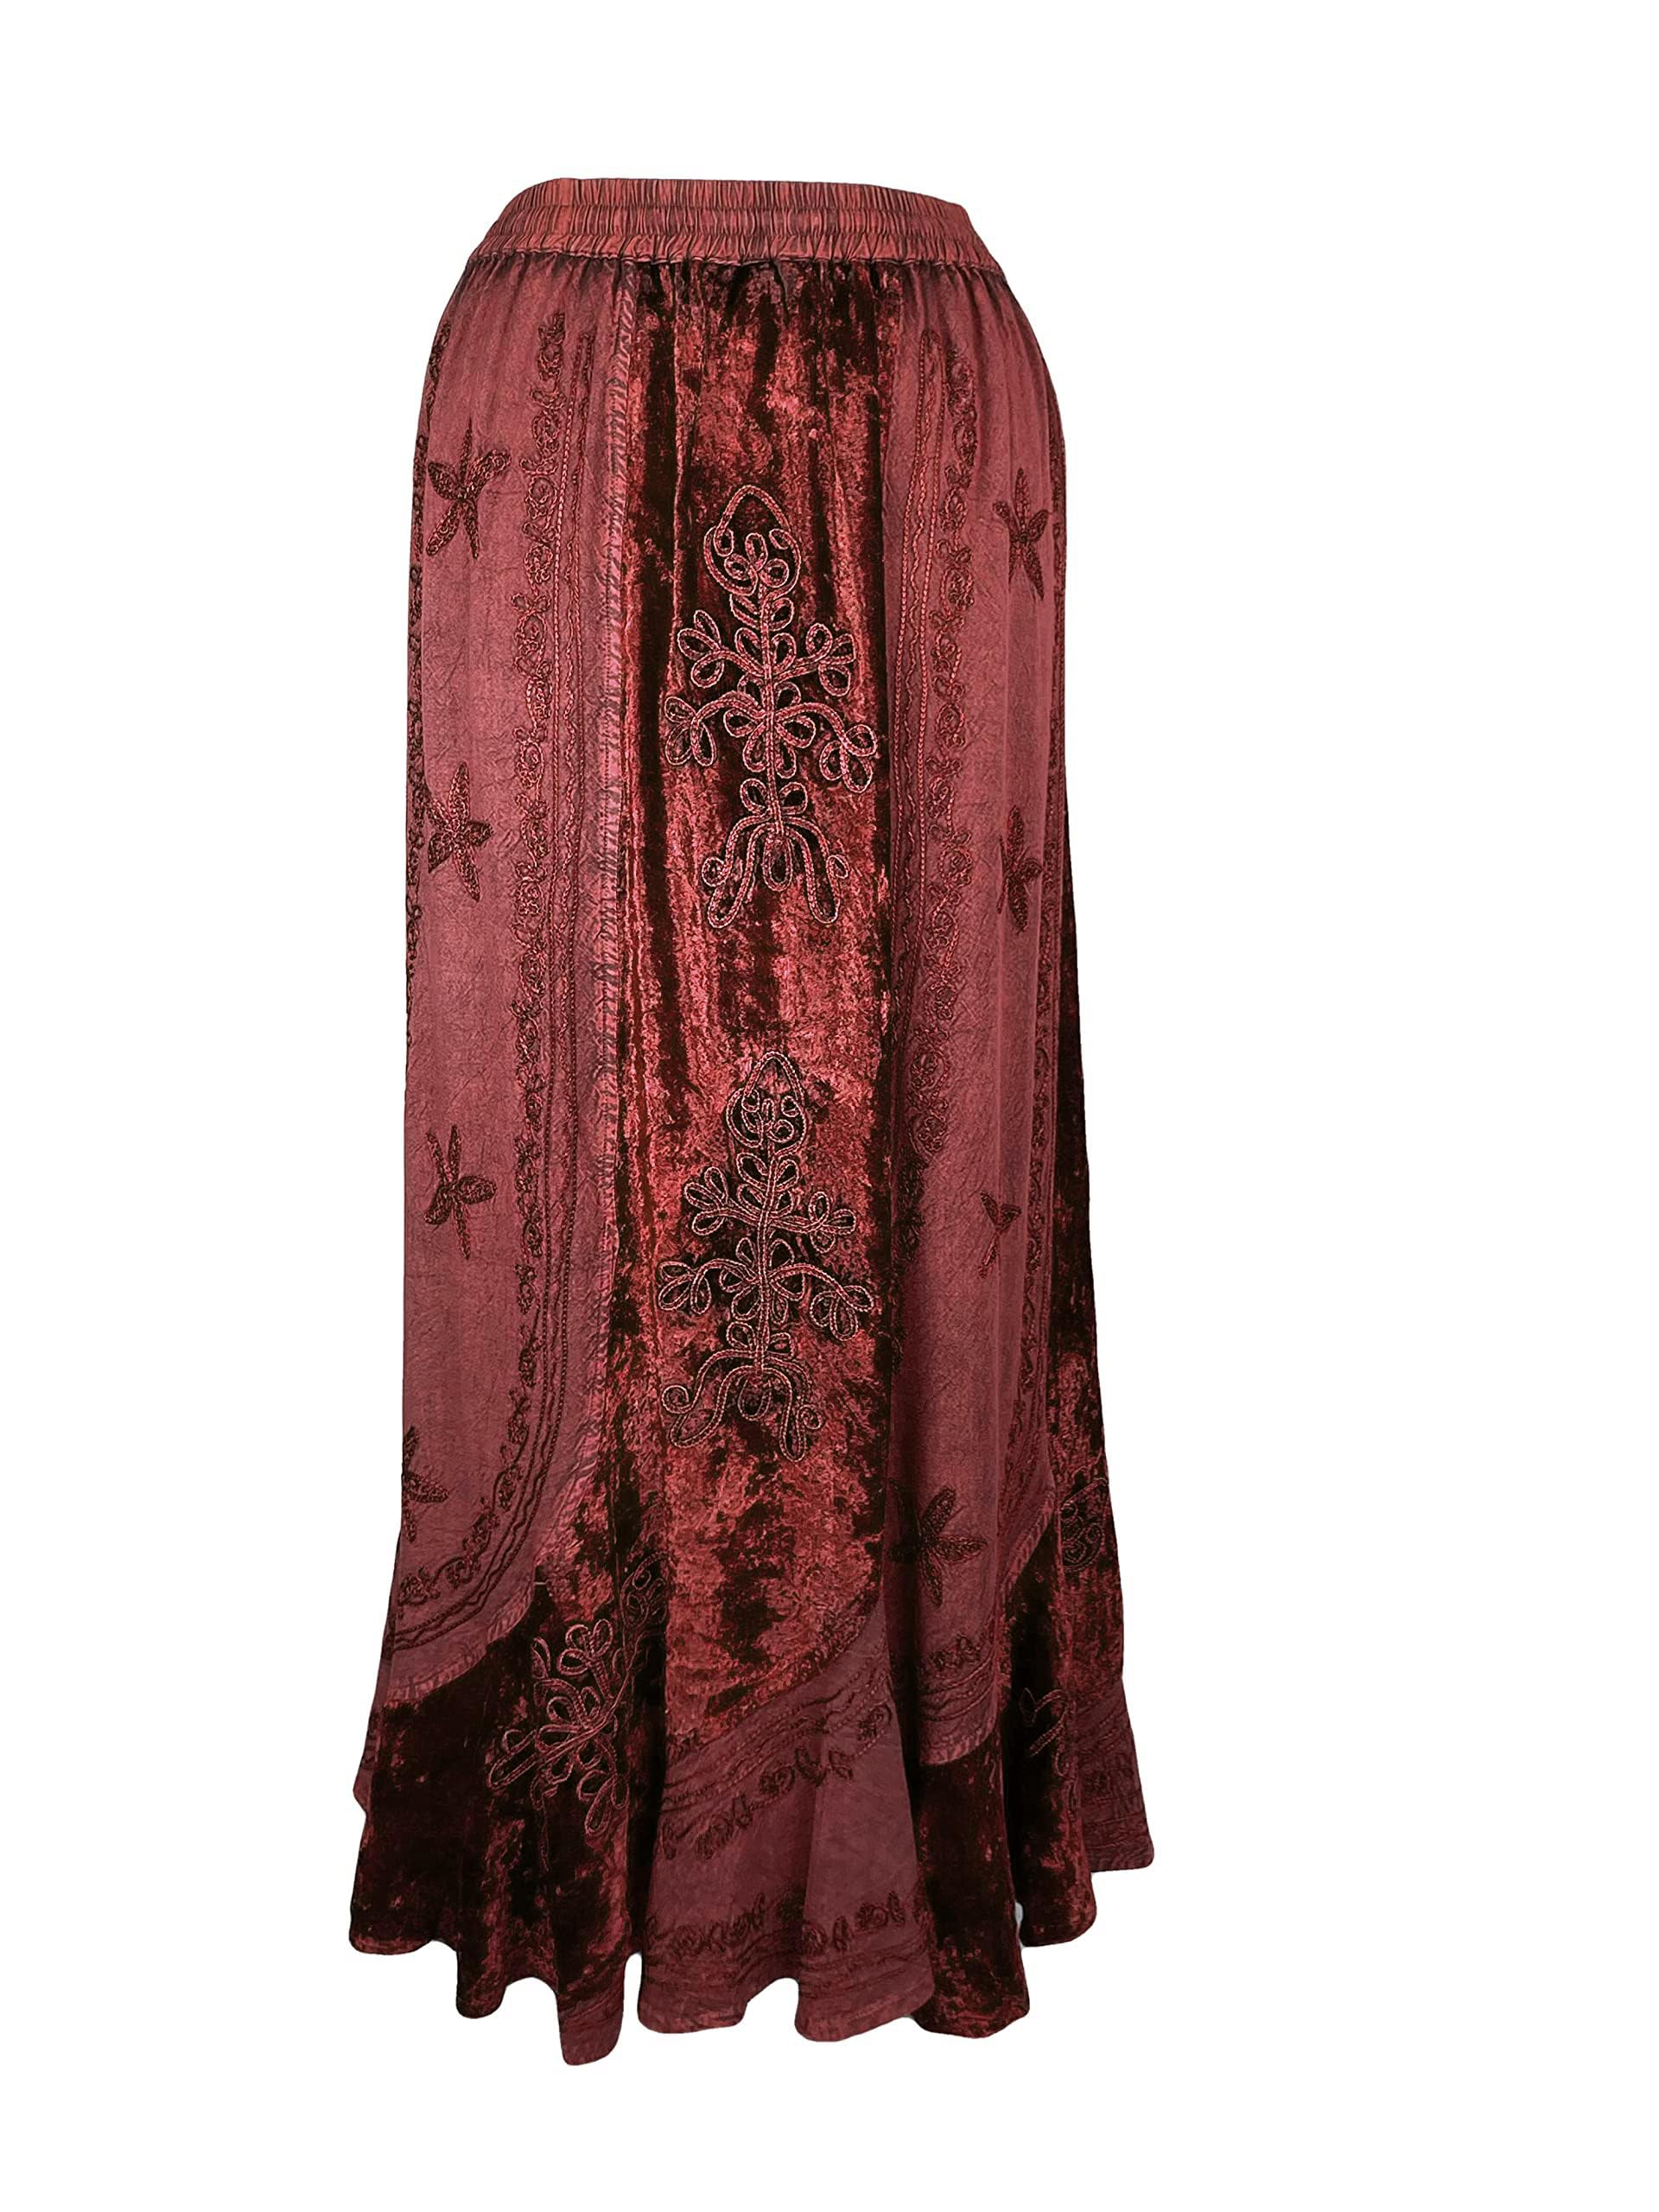 Agan Traders Women's Long Rayon Velvet High Waistband Boho Vintage Embroidered Maxi Skirt Regular Plus Size 2X 3X